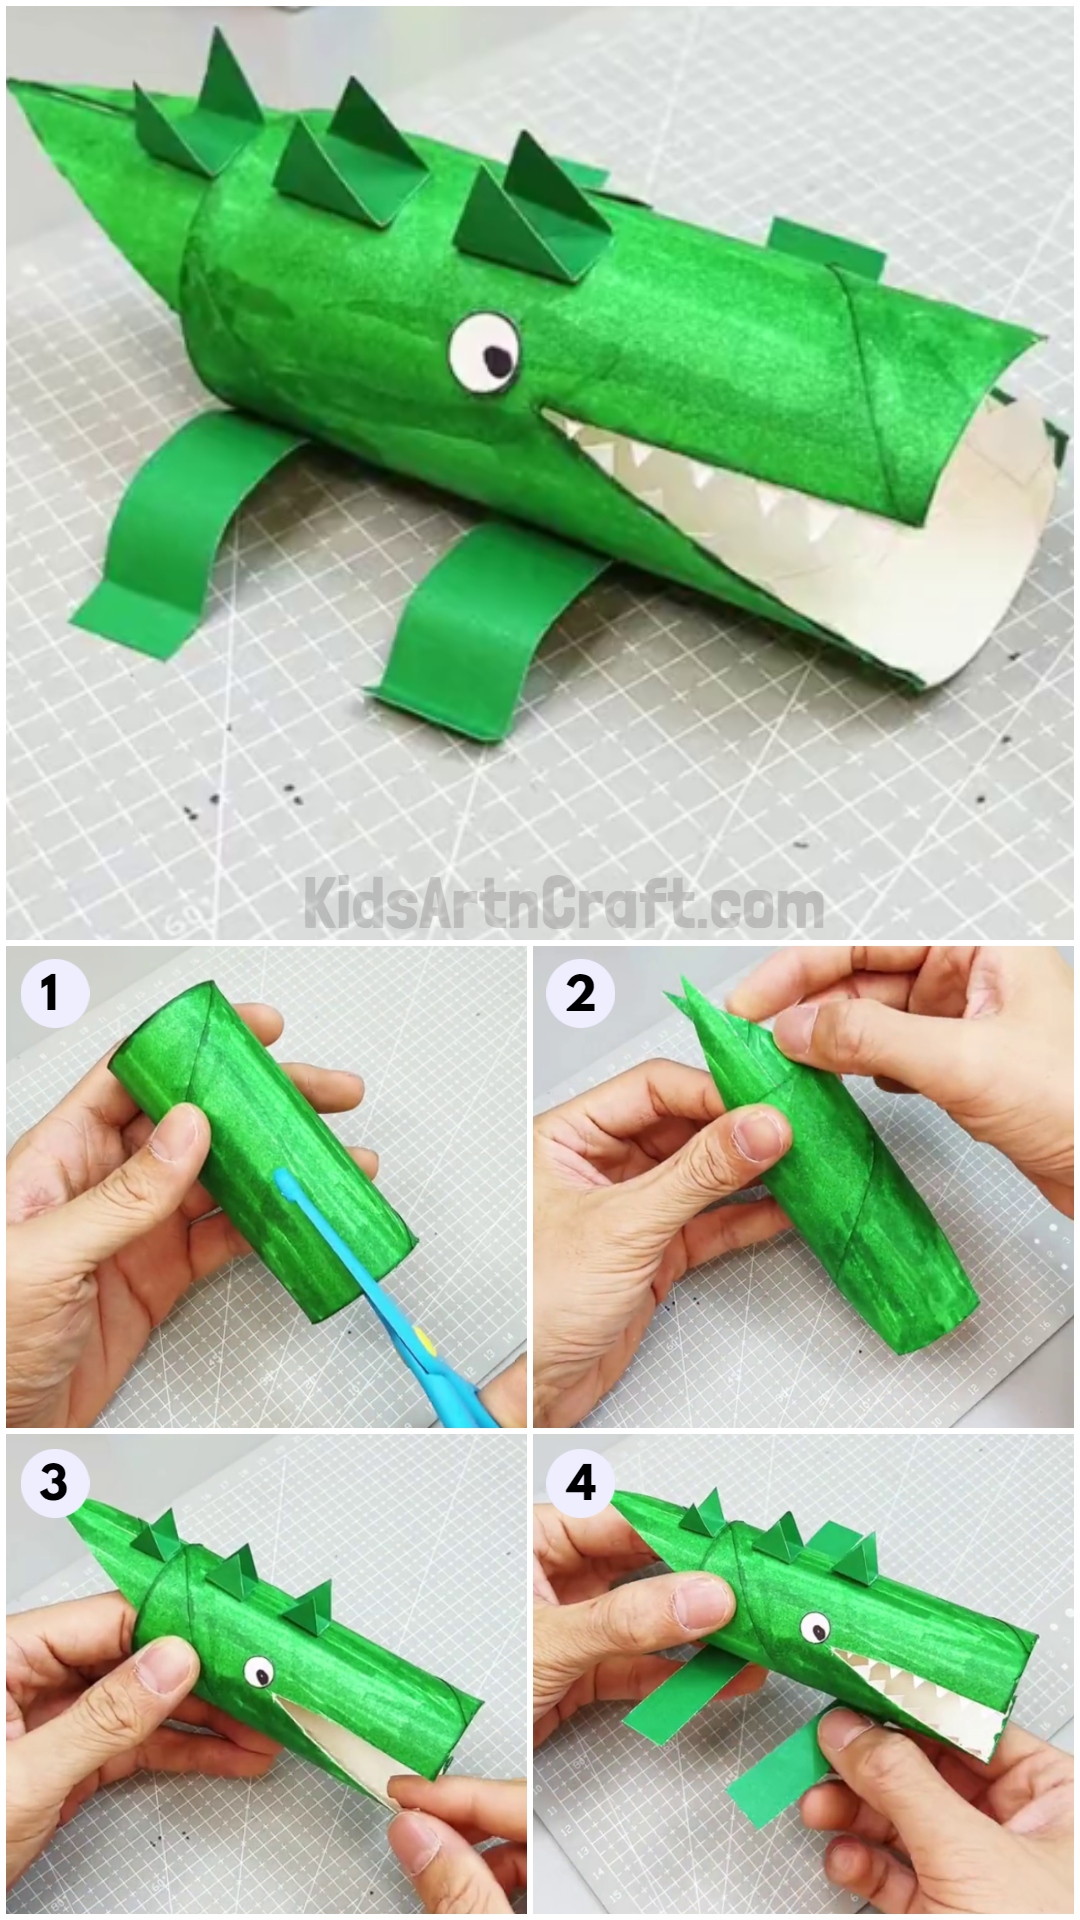 DIY Alligator Animal craft From Toilet Paper Rolls